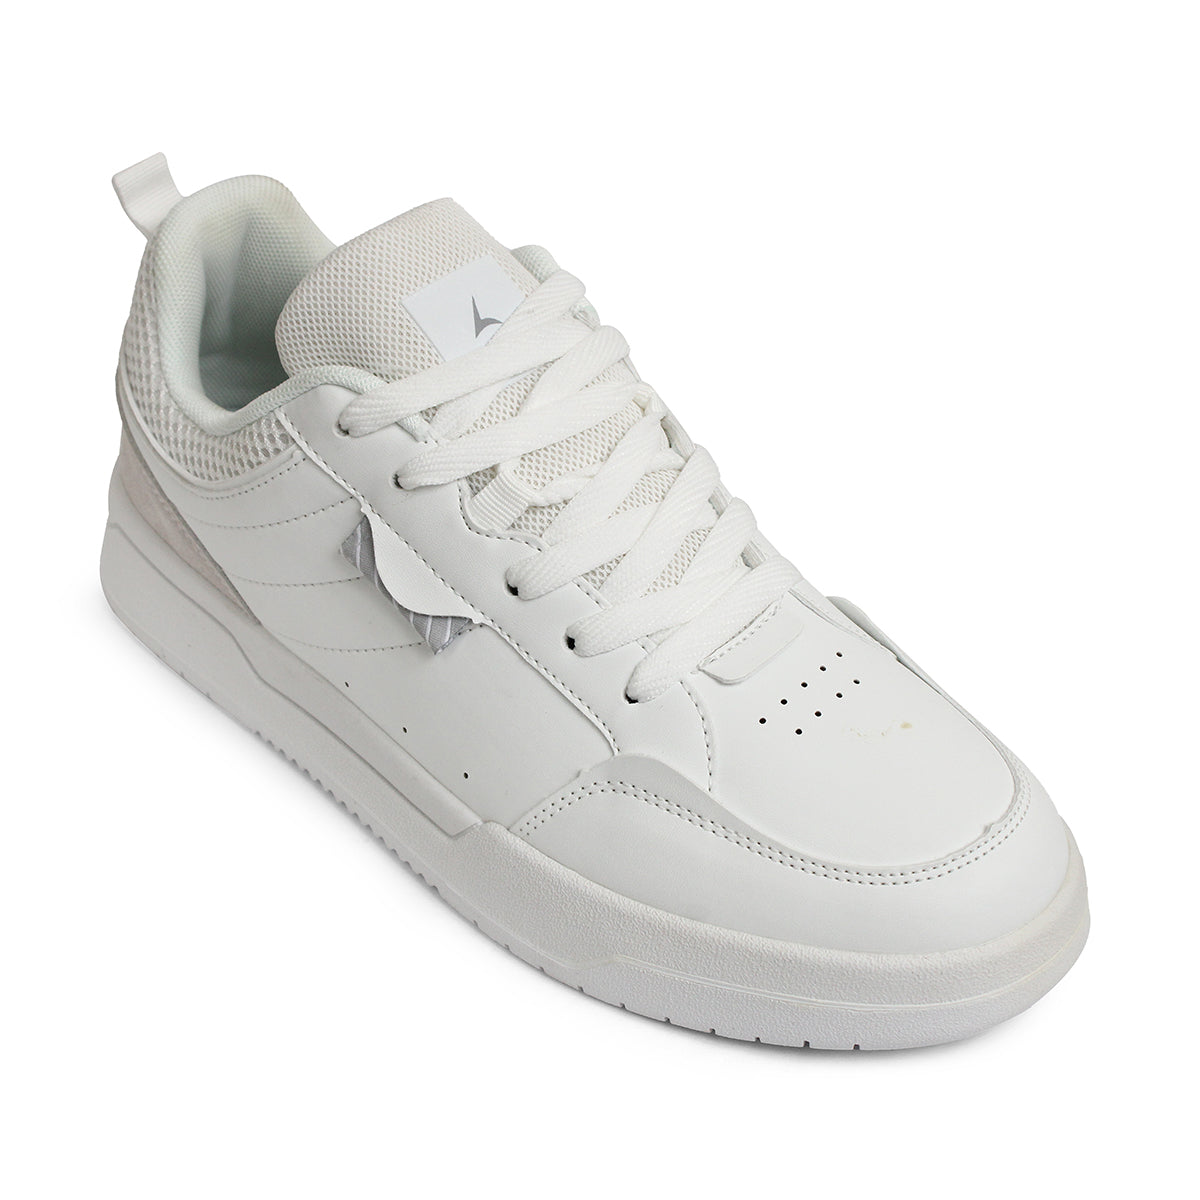 Men's Sneakers White